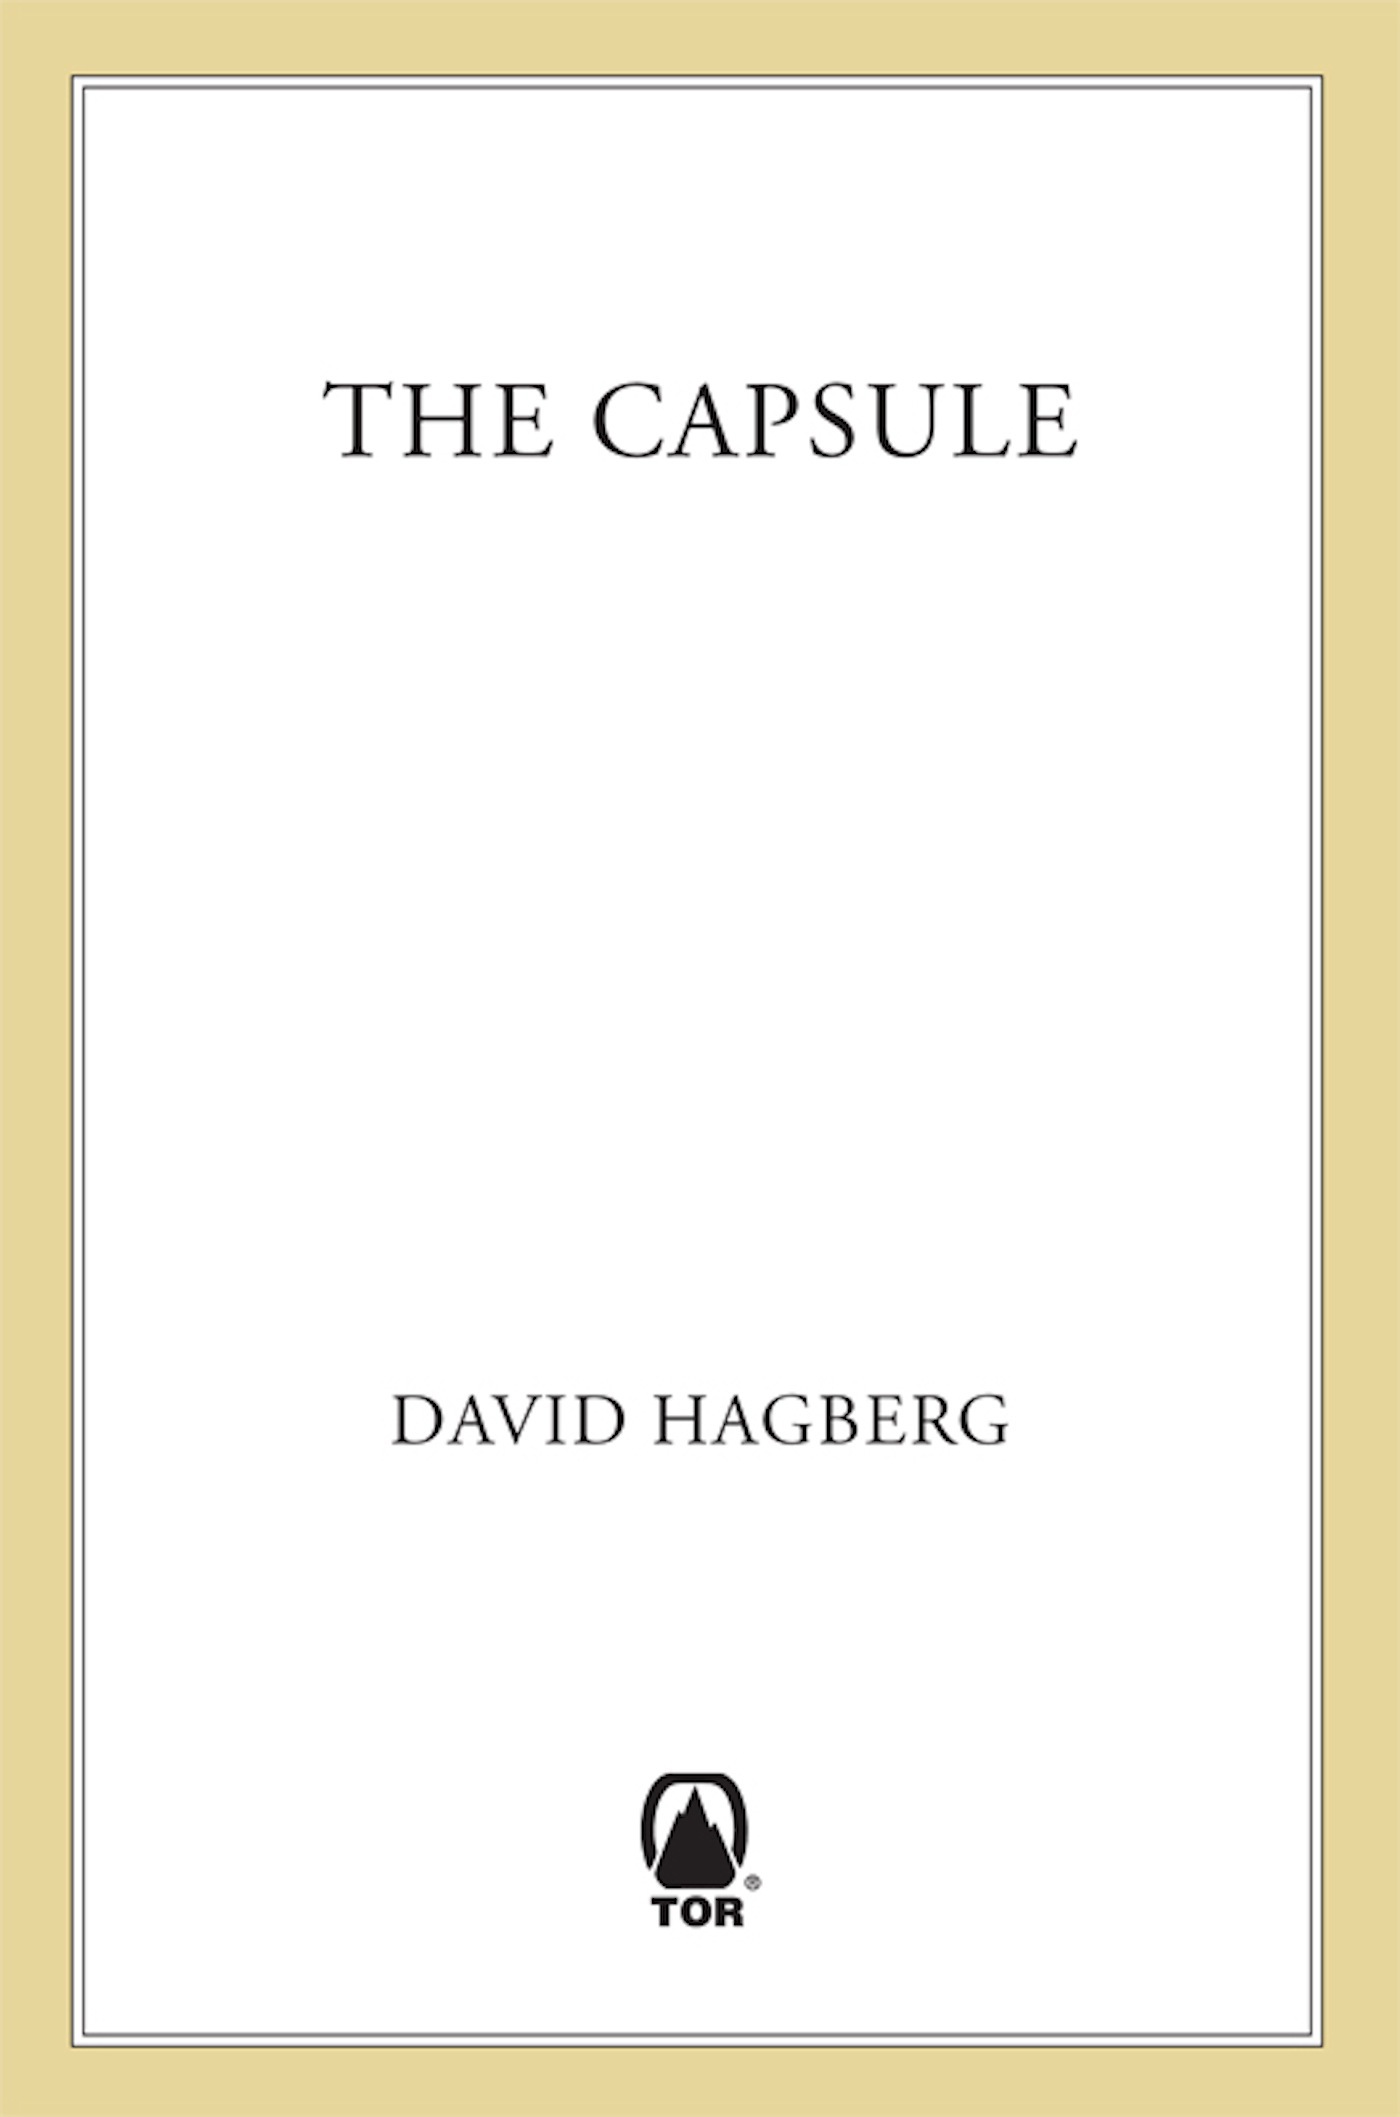 The Capsule by David Hagberg